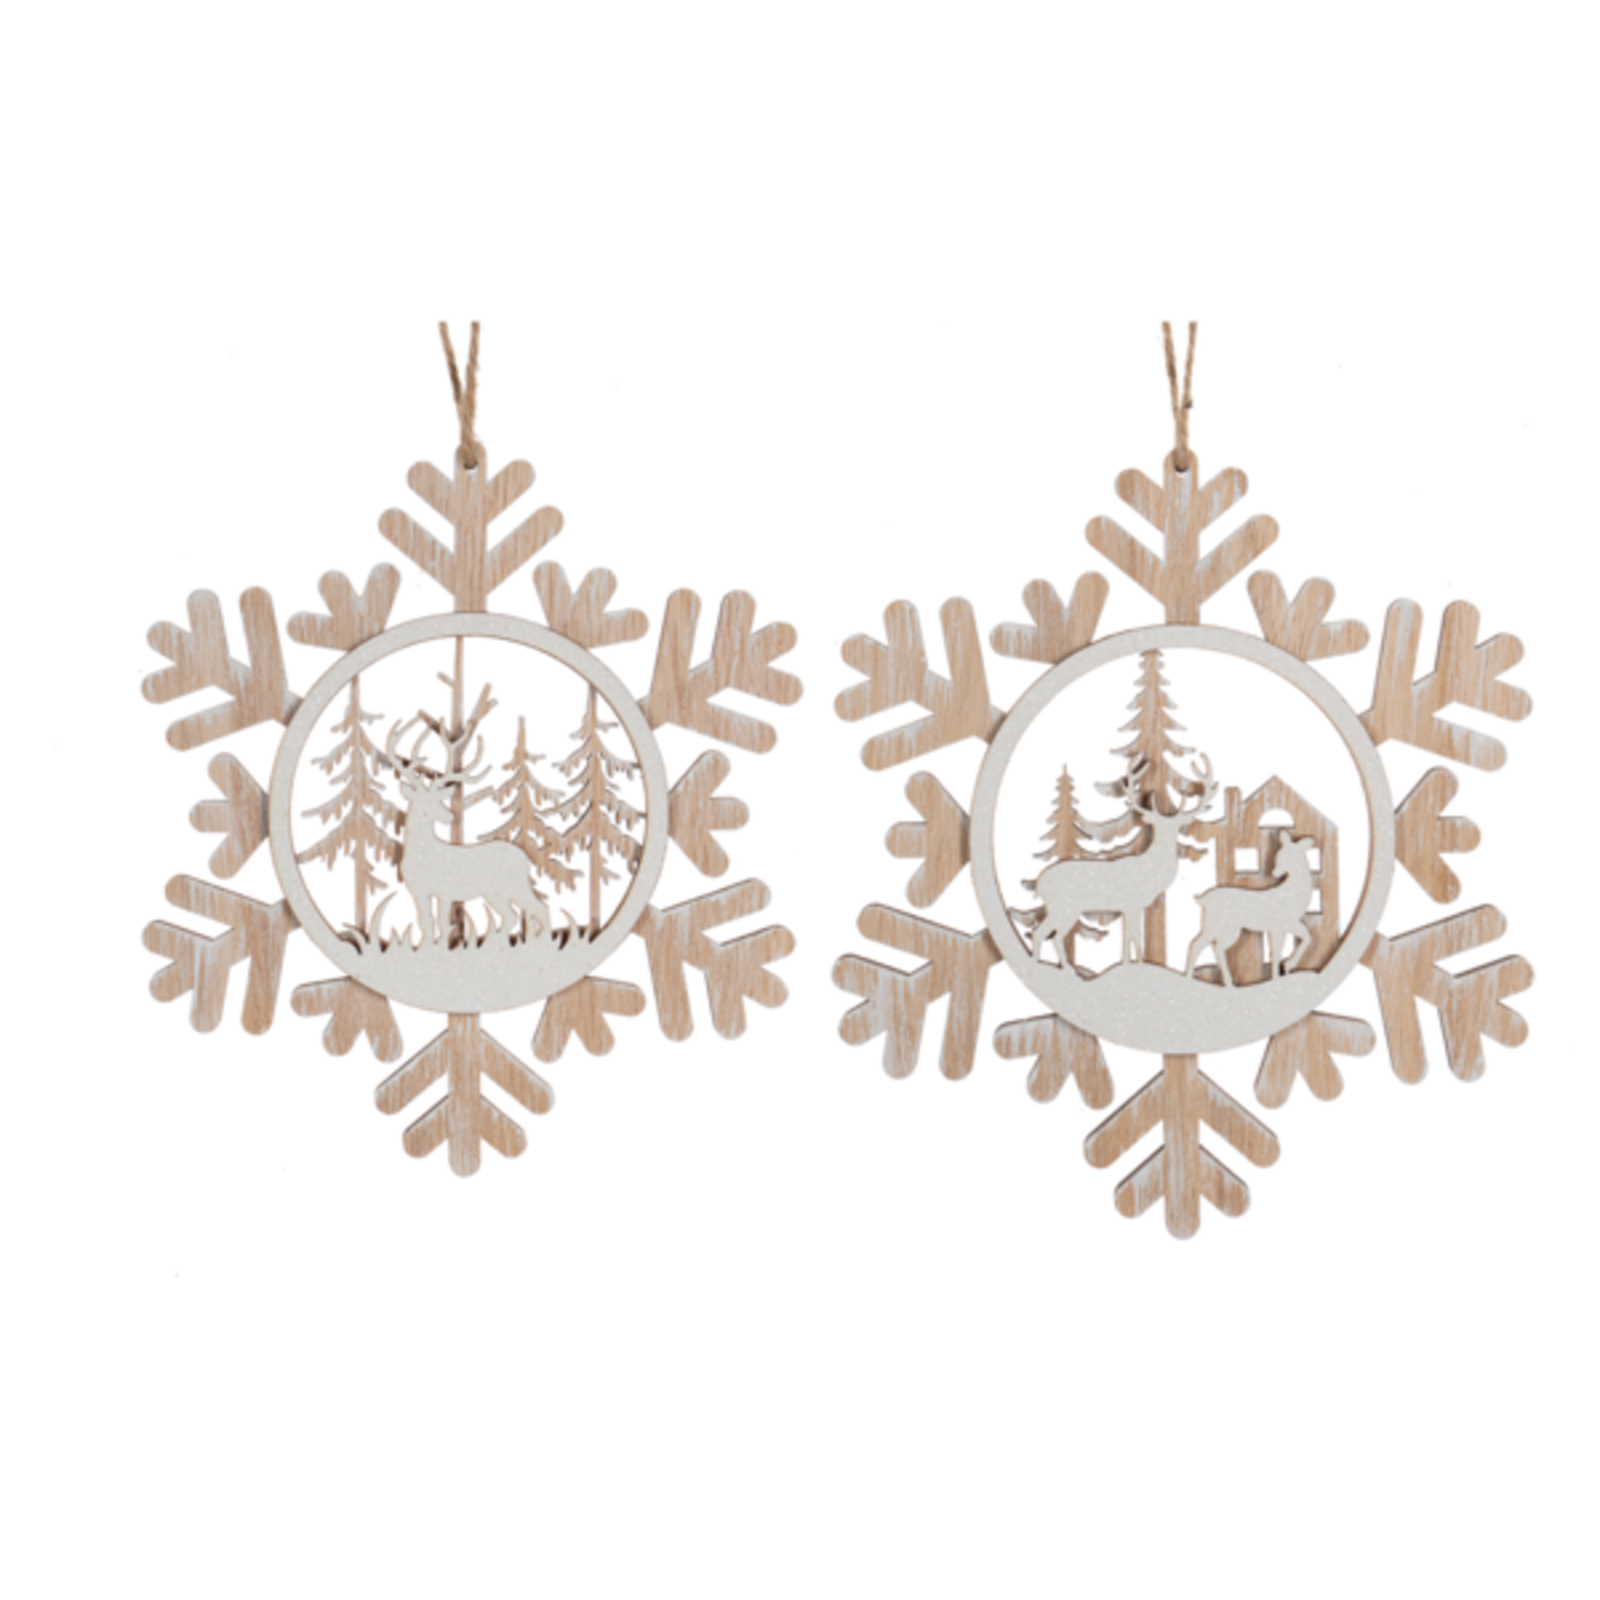 Ganz Cut-Out Deer Snowflake Ornament   MX188162 loading=